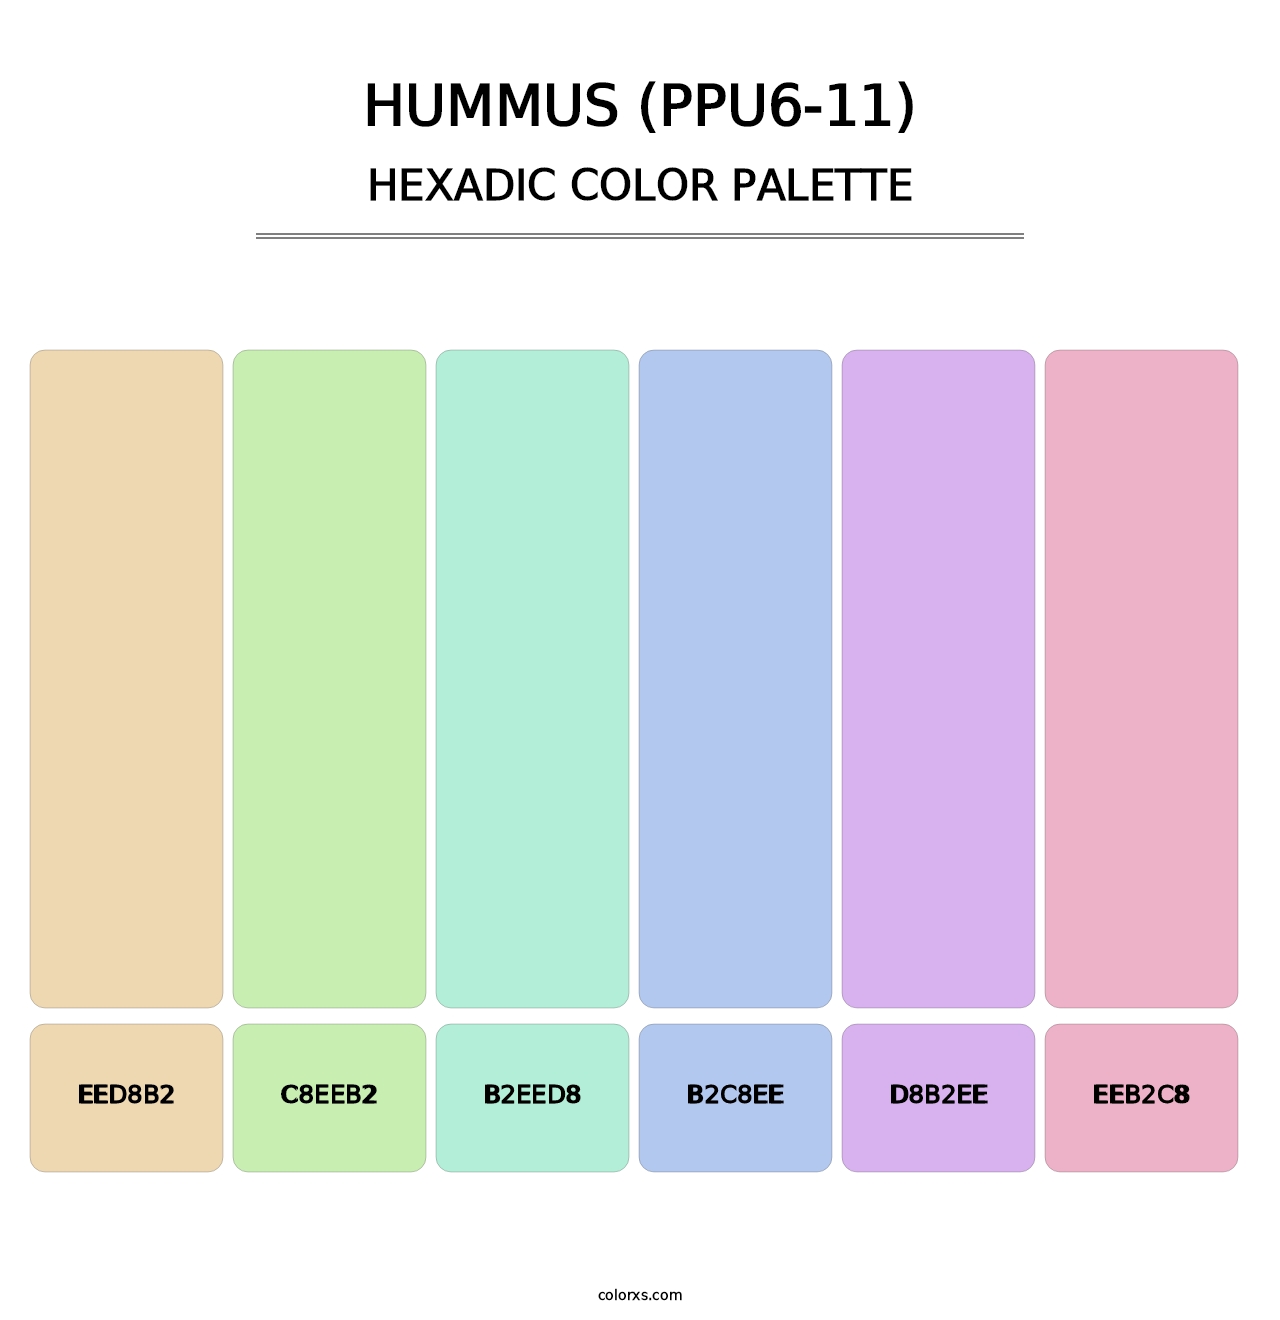 Hummus (PPU6-11) - Hexadic Color Palette